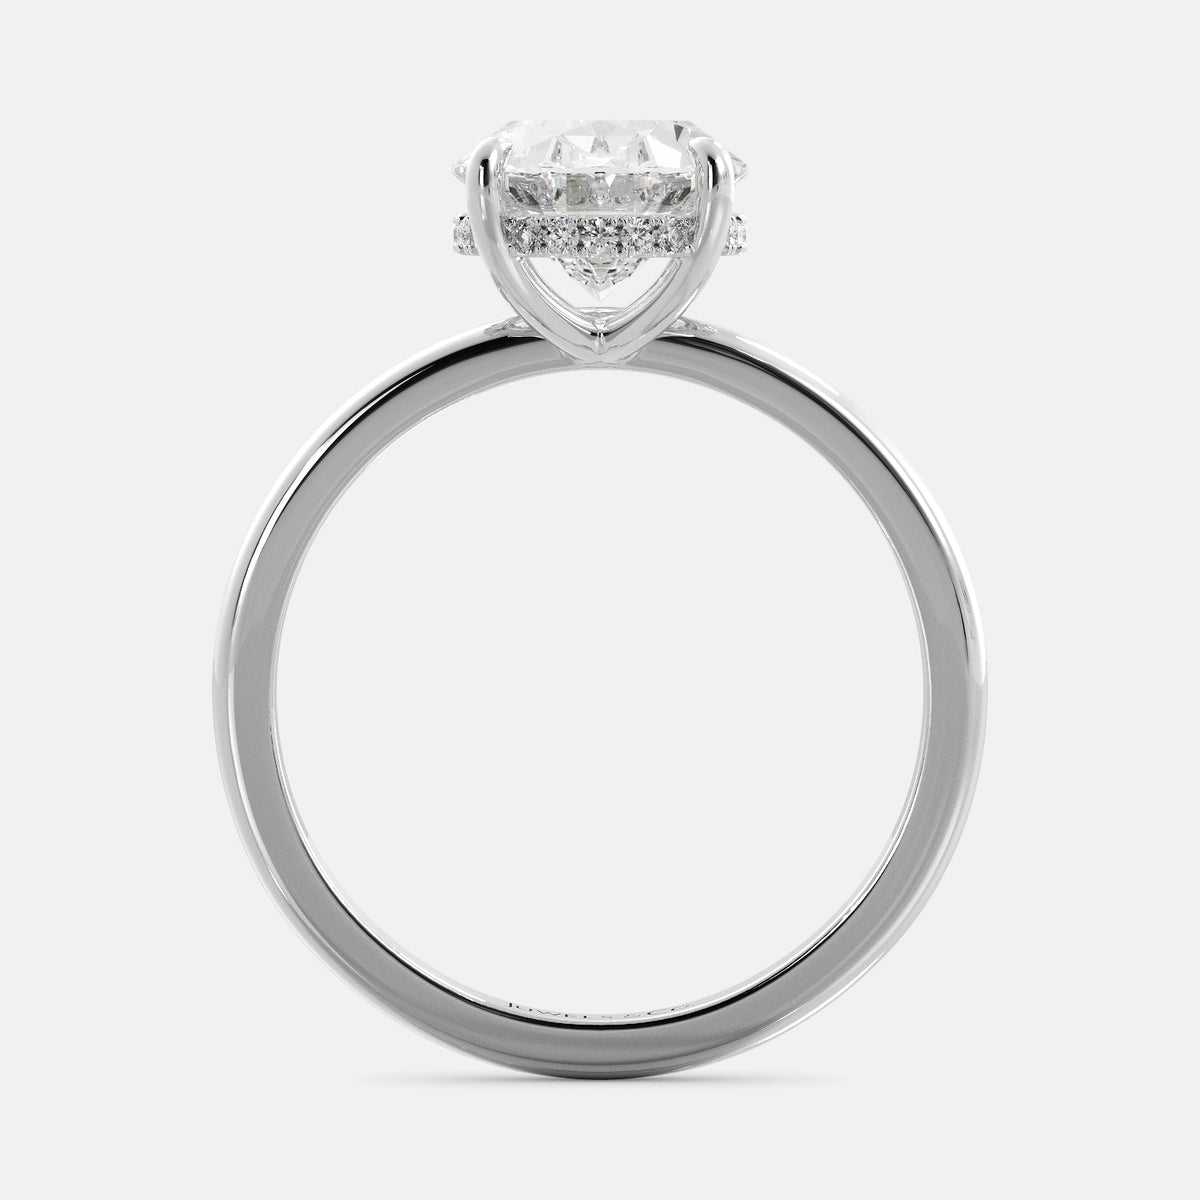 Lab-grown Oval Cut Diamond Ring, 2 carat, white gold 14K